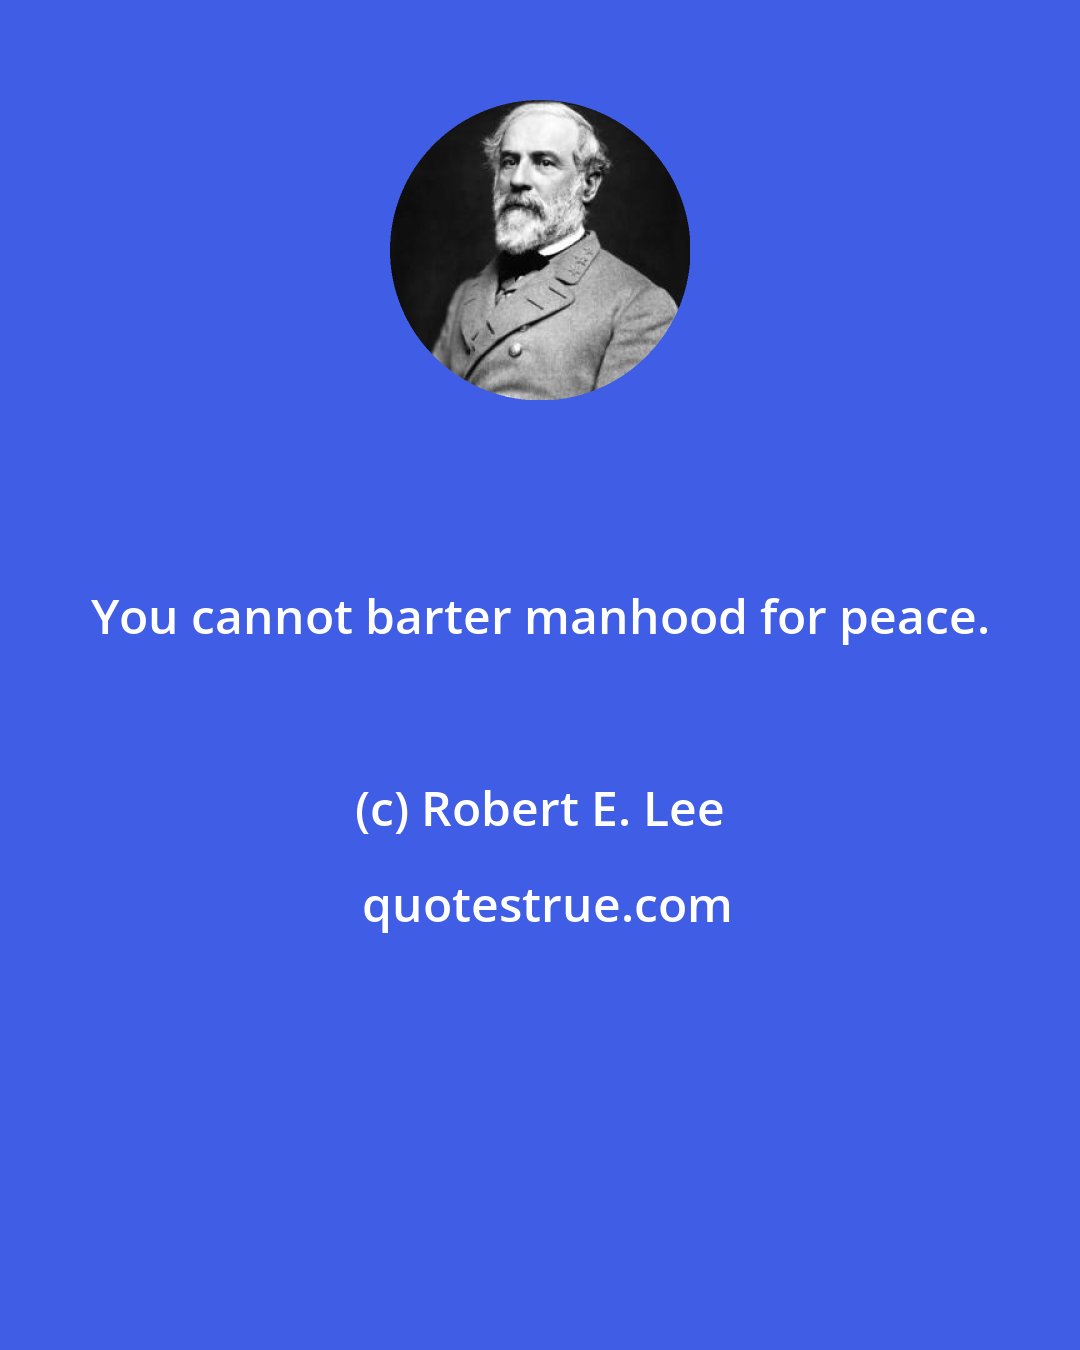 Robert E. Lee: You cannot barter manhood for peace.